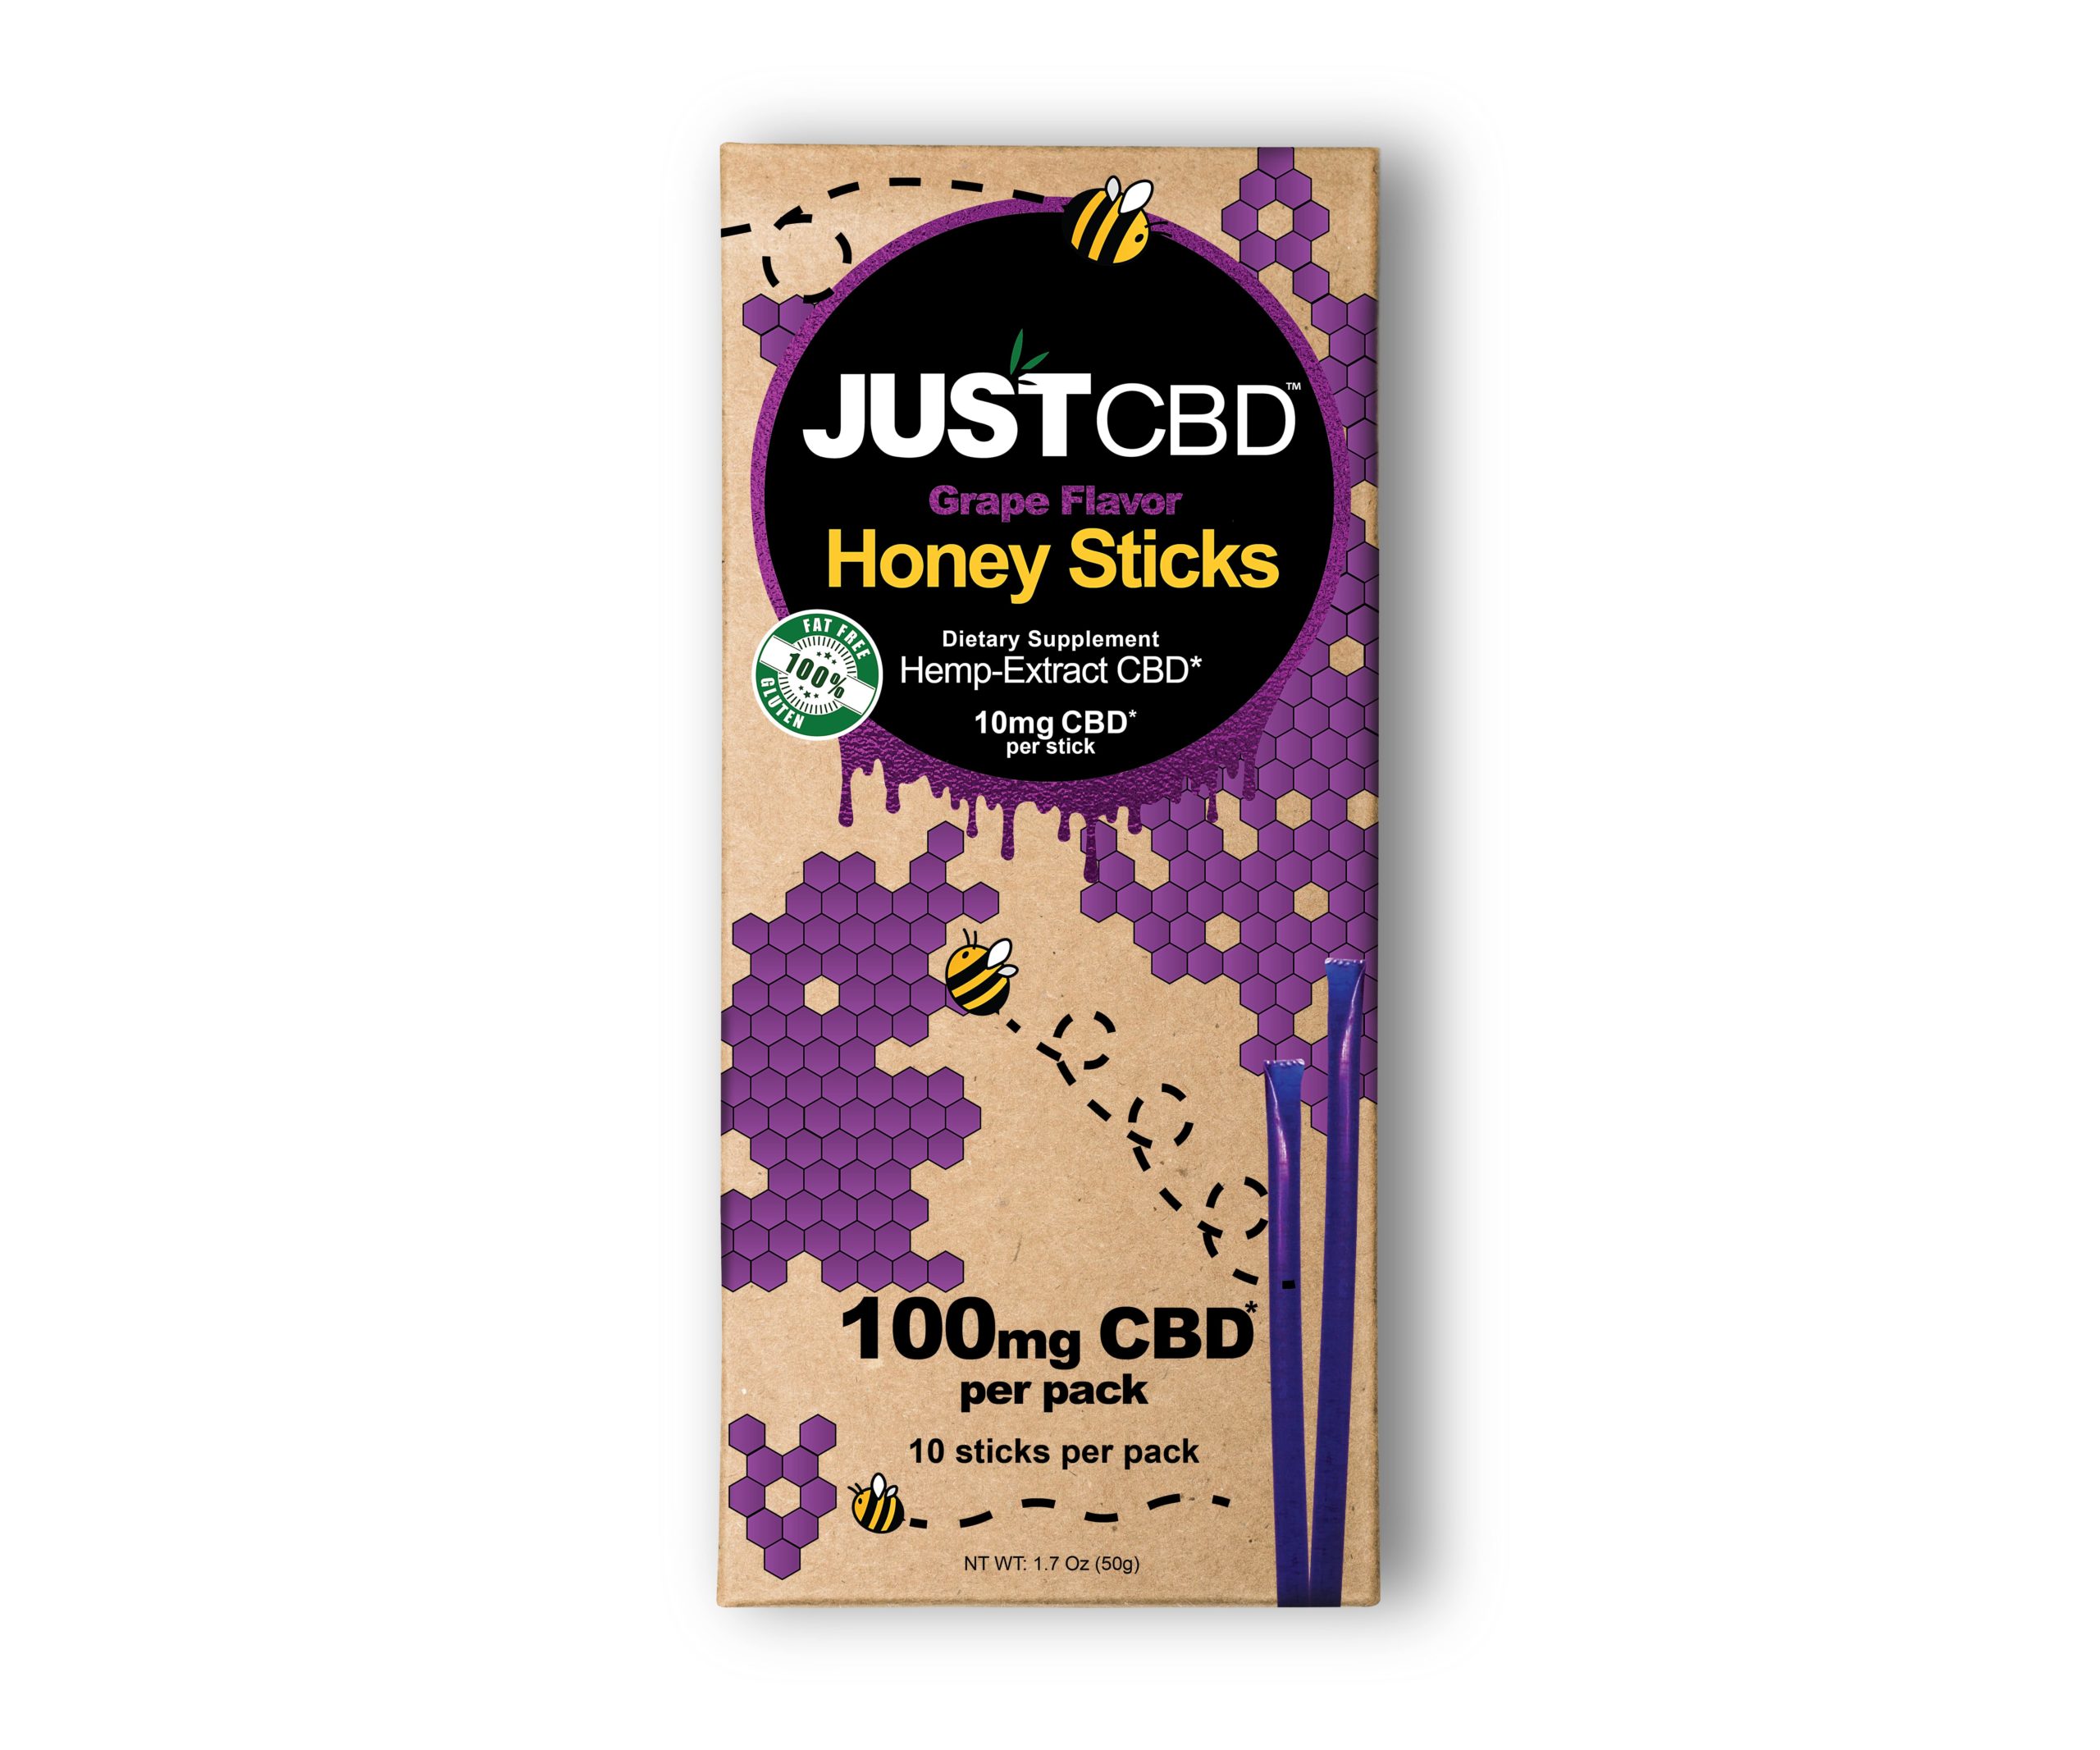 Cbd honey sticks benefits - results - cost - price